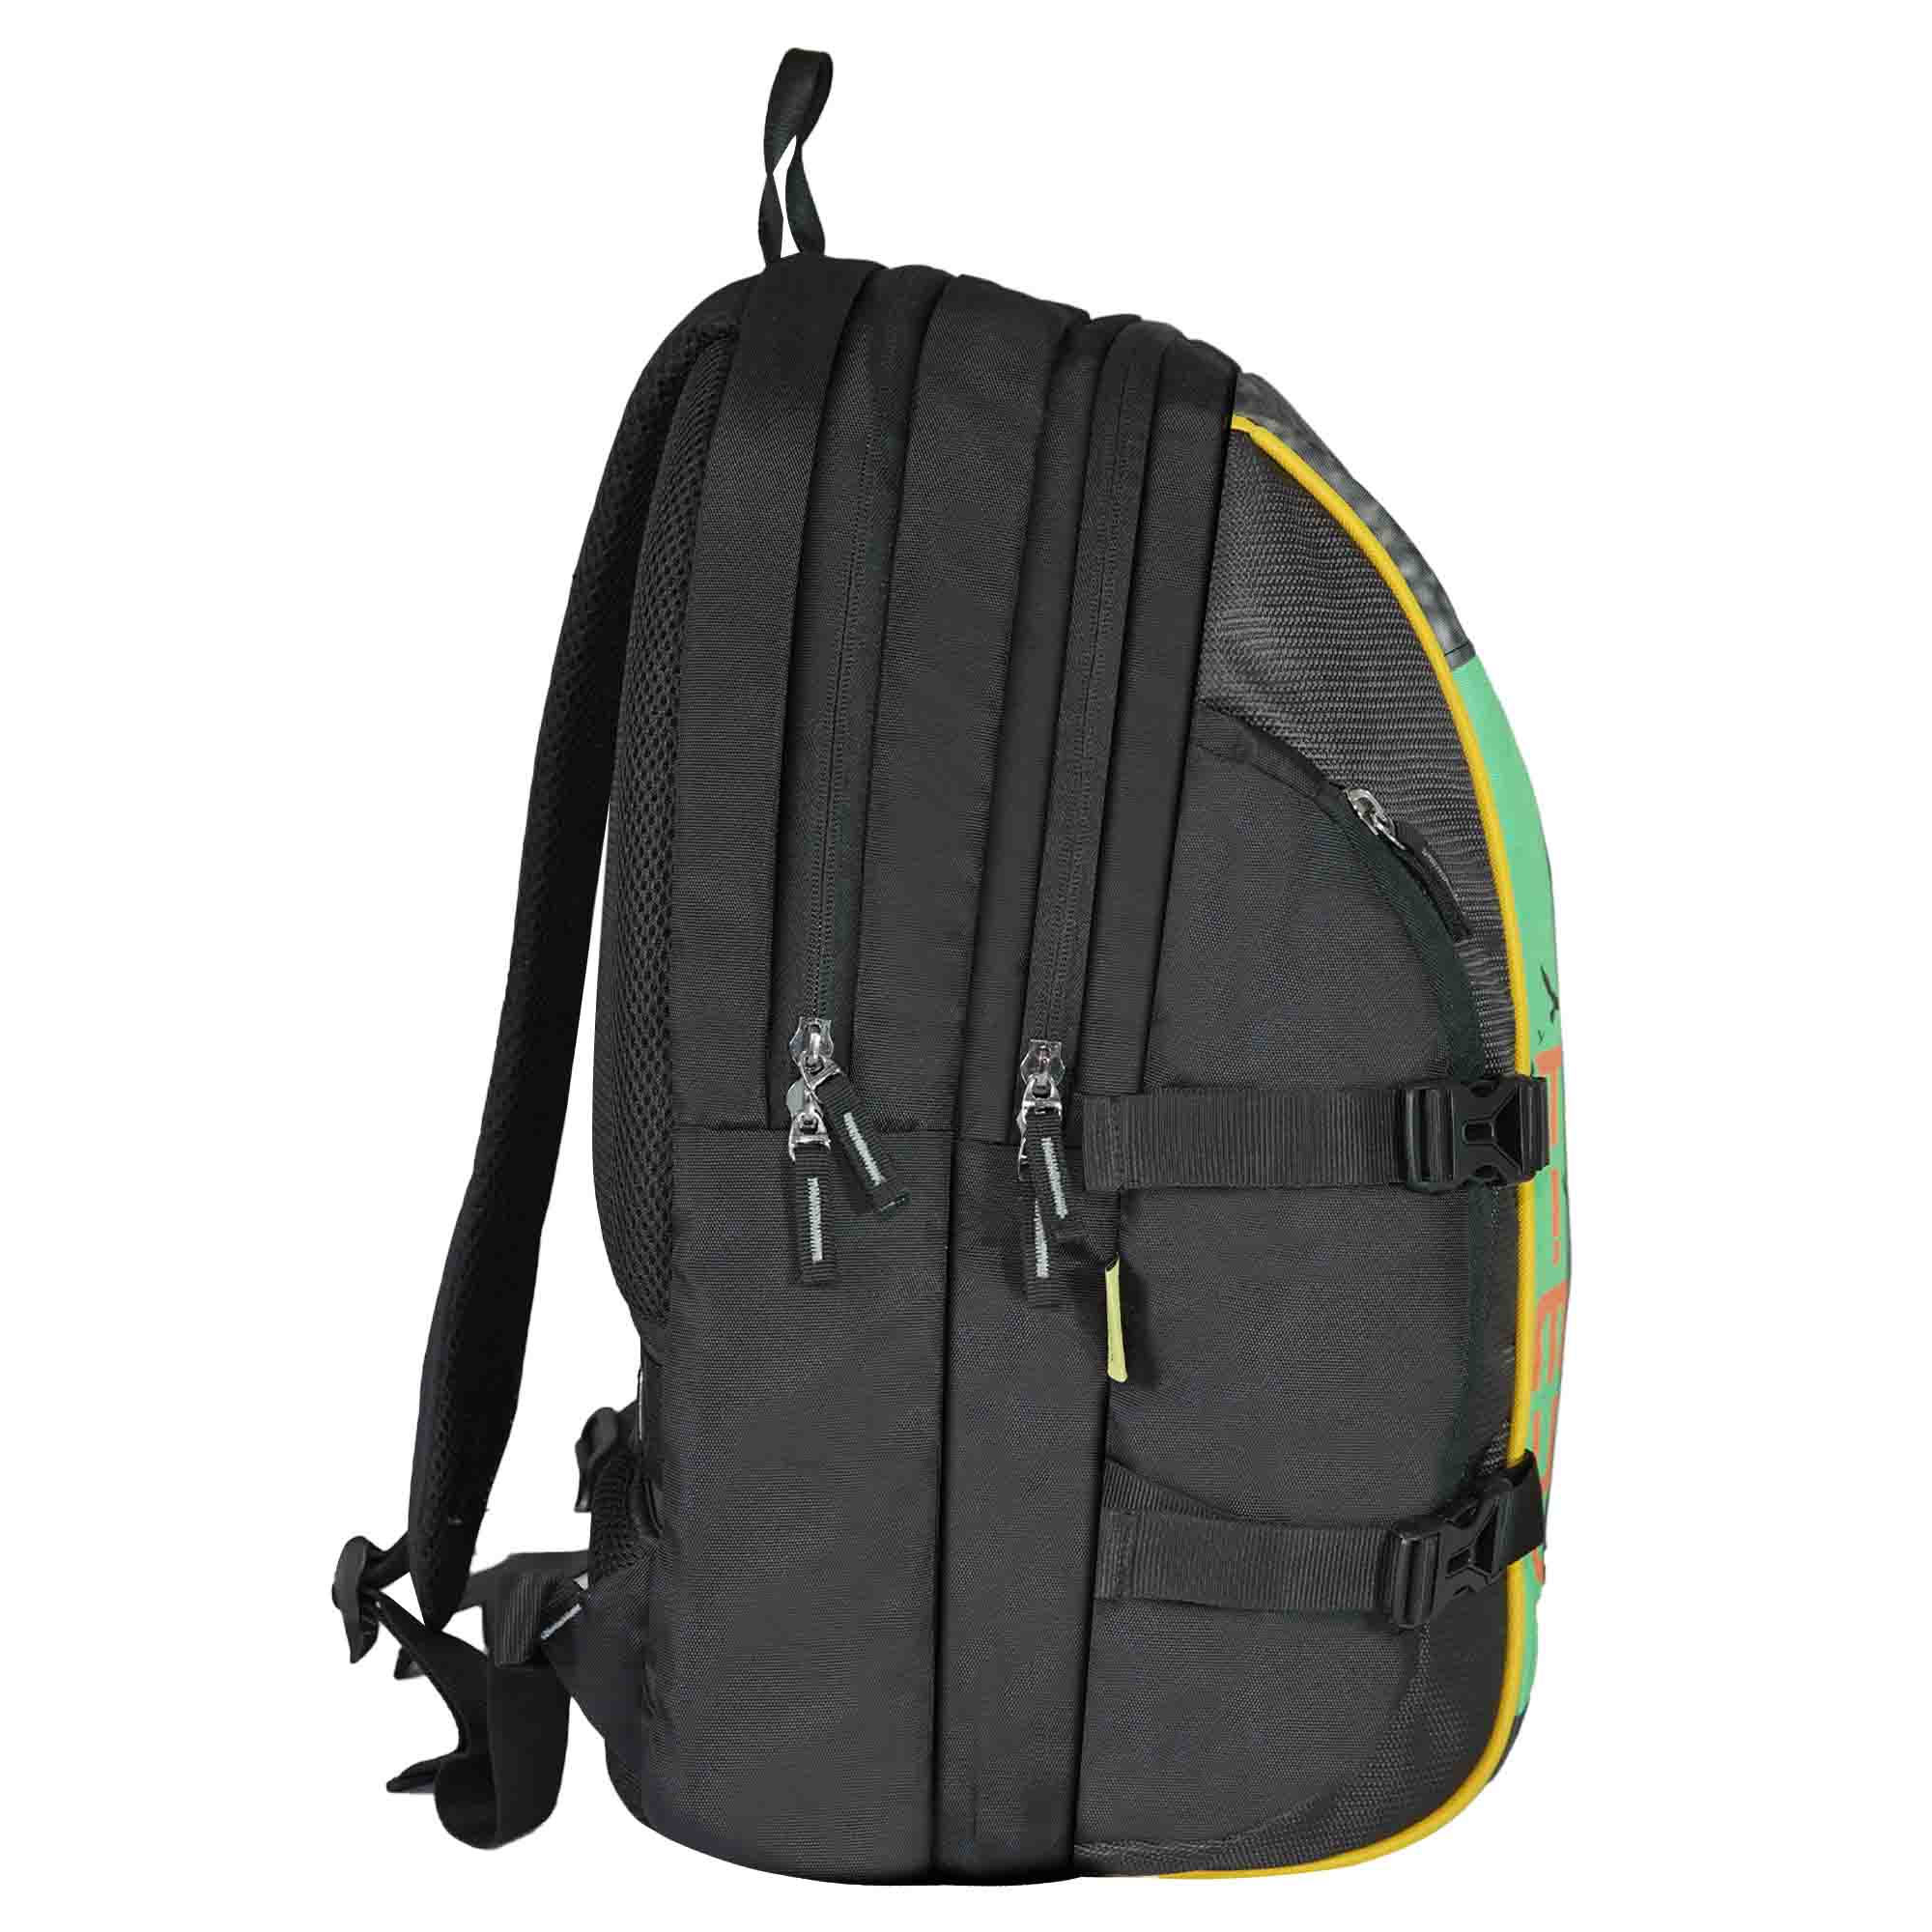 Timus-Lifestyle-backpacks-casual-backpacks-here-i-am-black-4